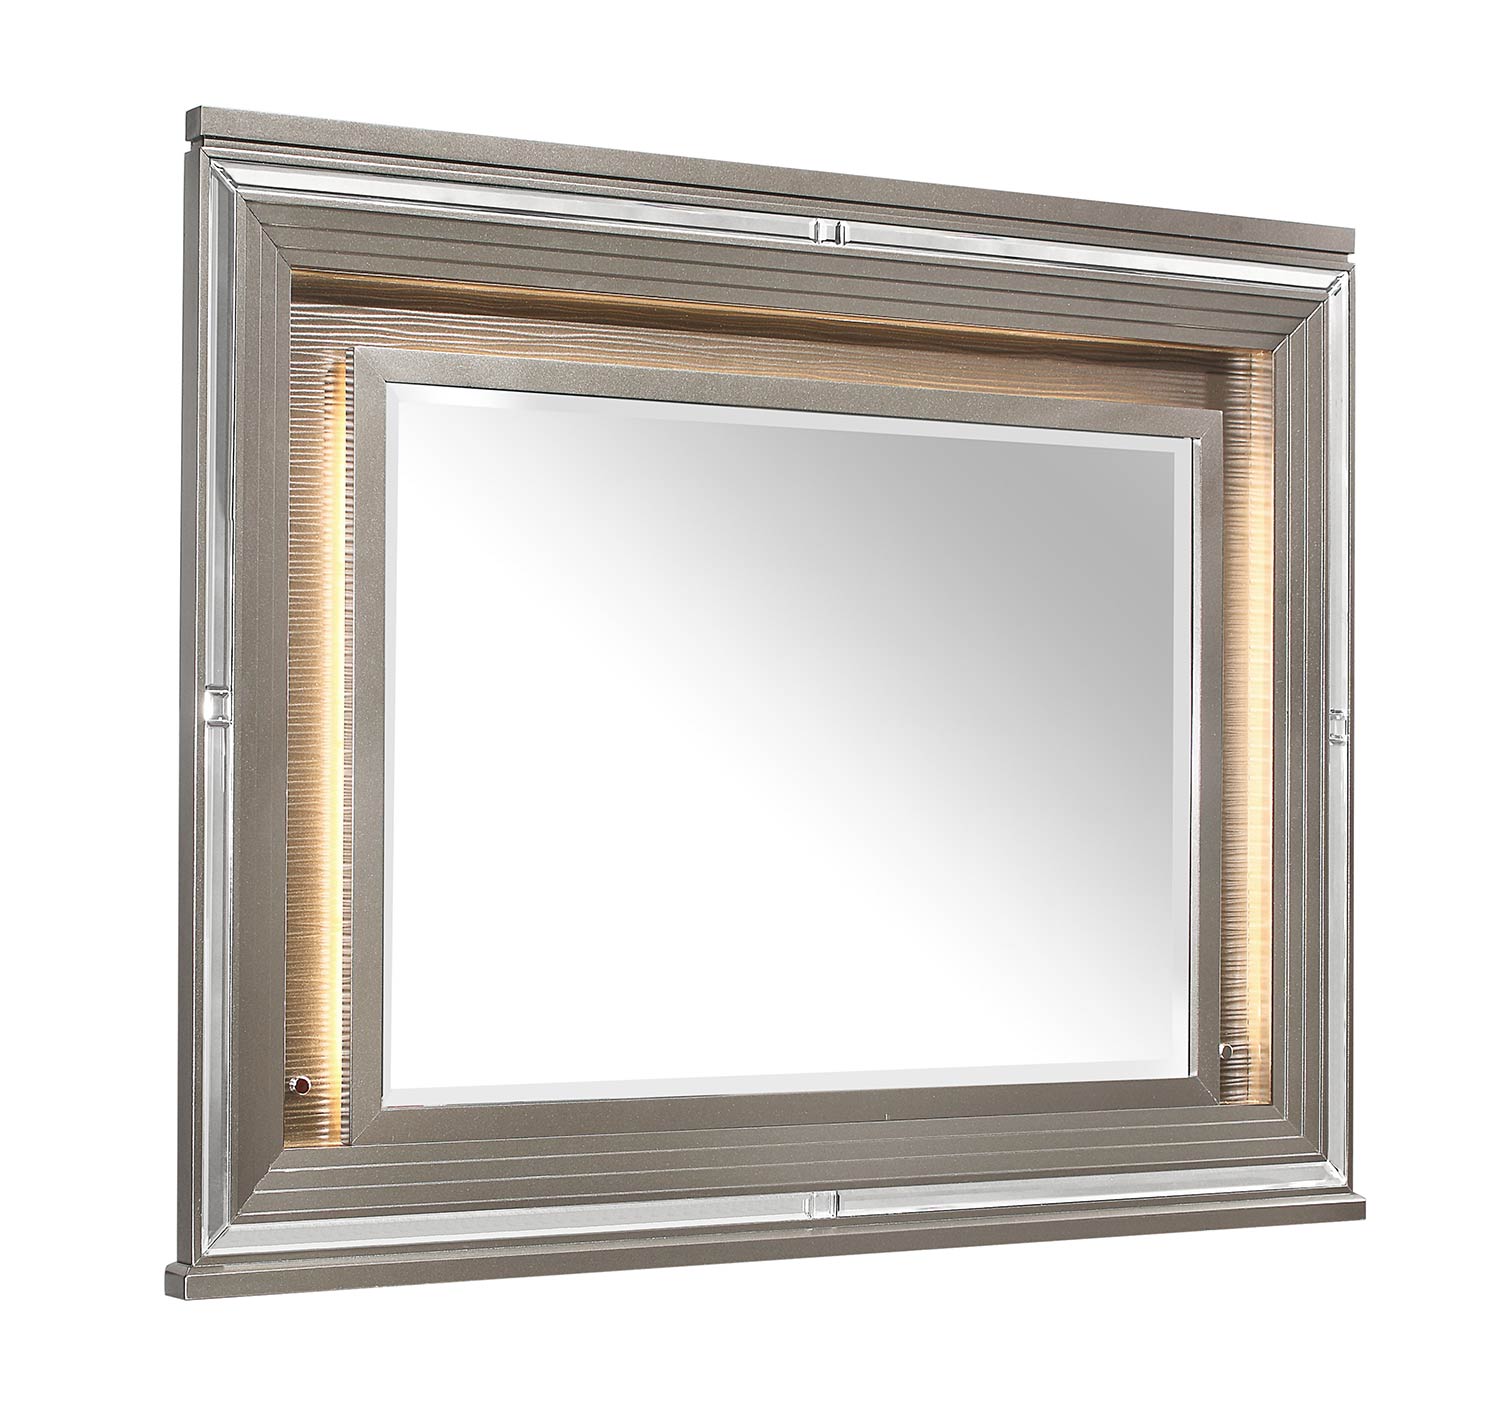 Homelegance Tamsin Mirror with LED Lighting - Silver-Gray Metallic